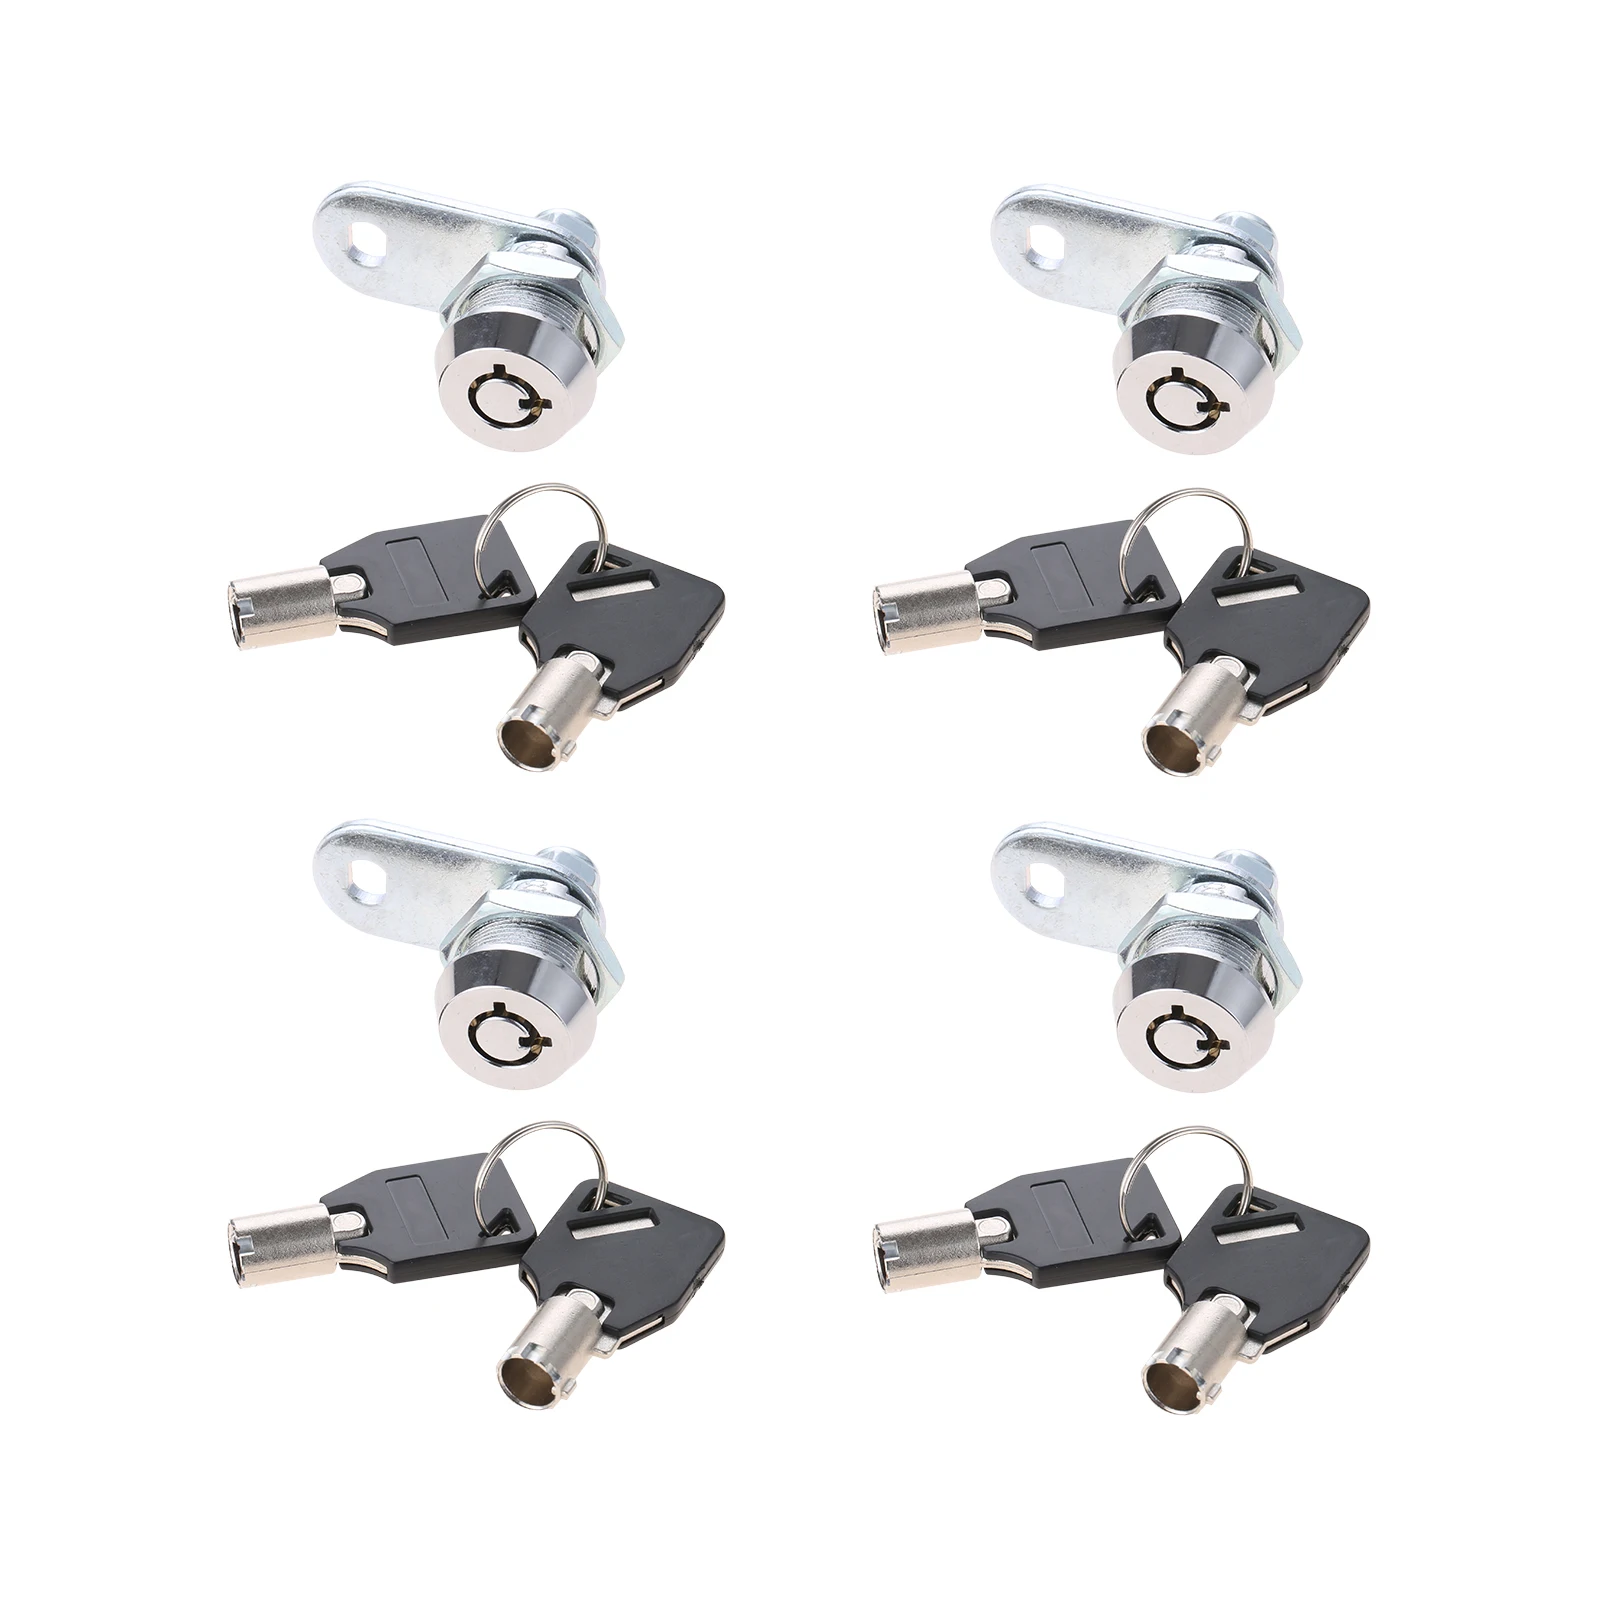 

4pcs Tubular Cam Locks with Keyed Alike Removable Key Suitable for Cabinets Enclosures Tool Box RV Doors Desks File Drawers